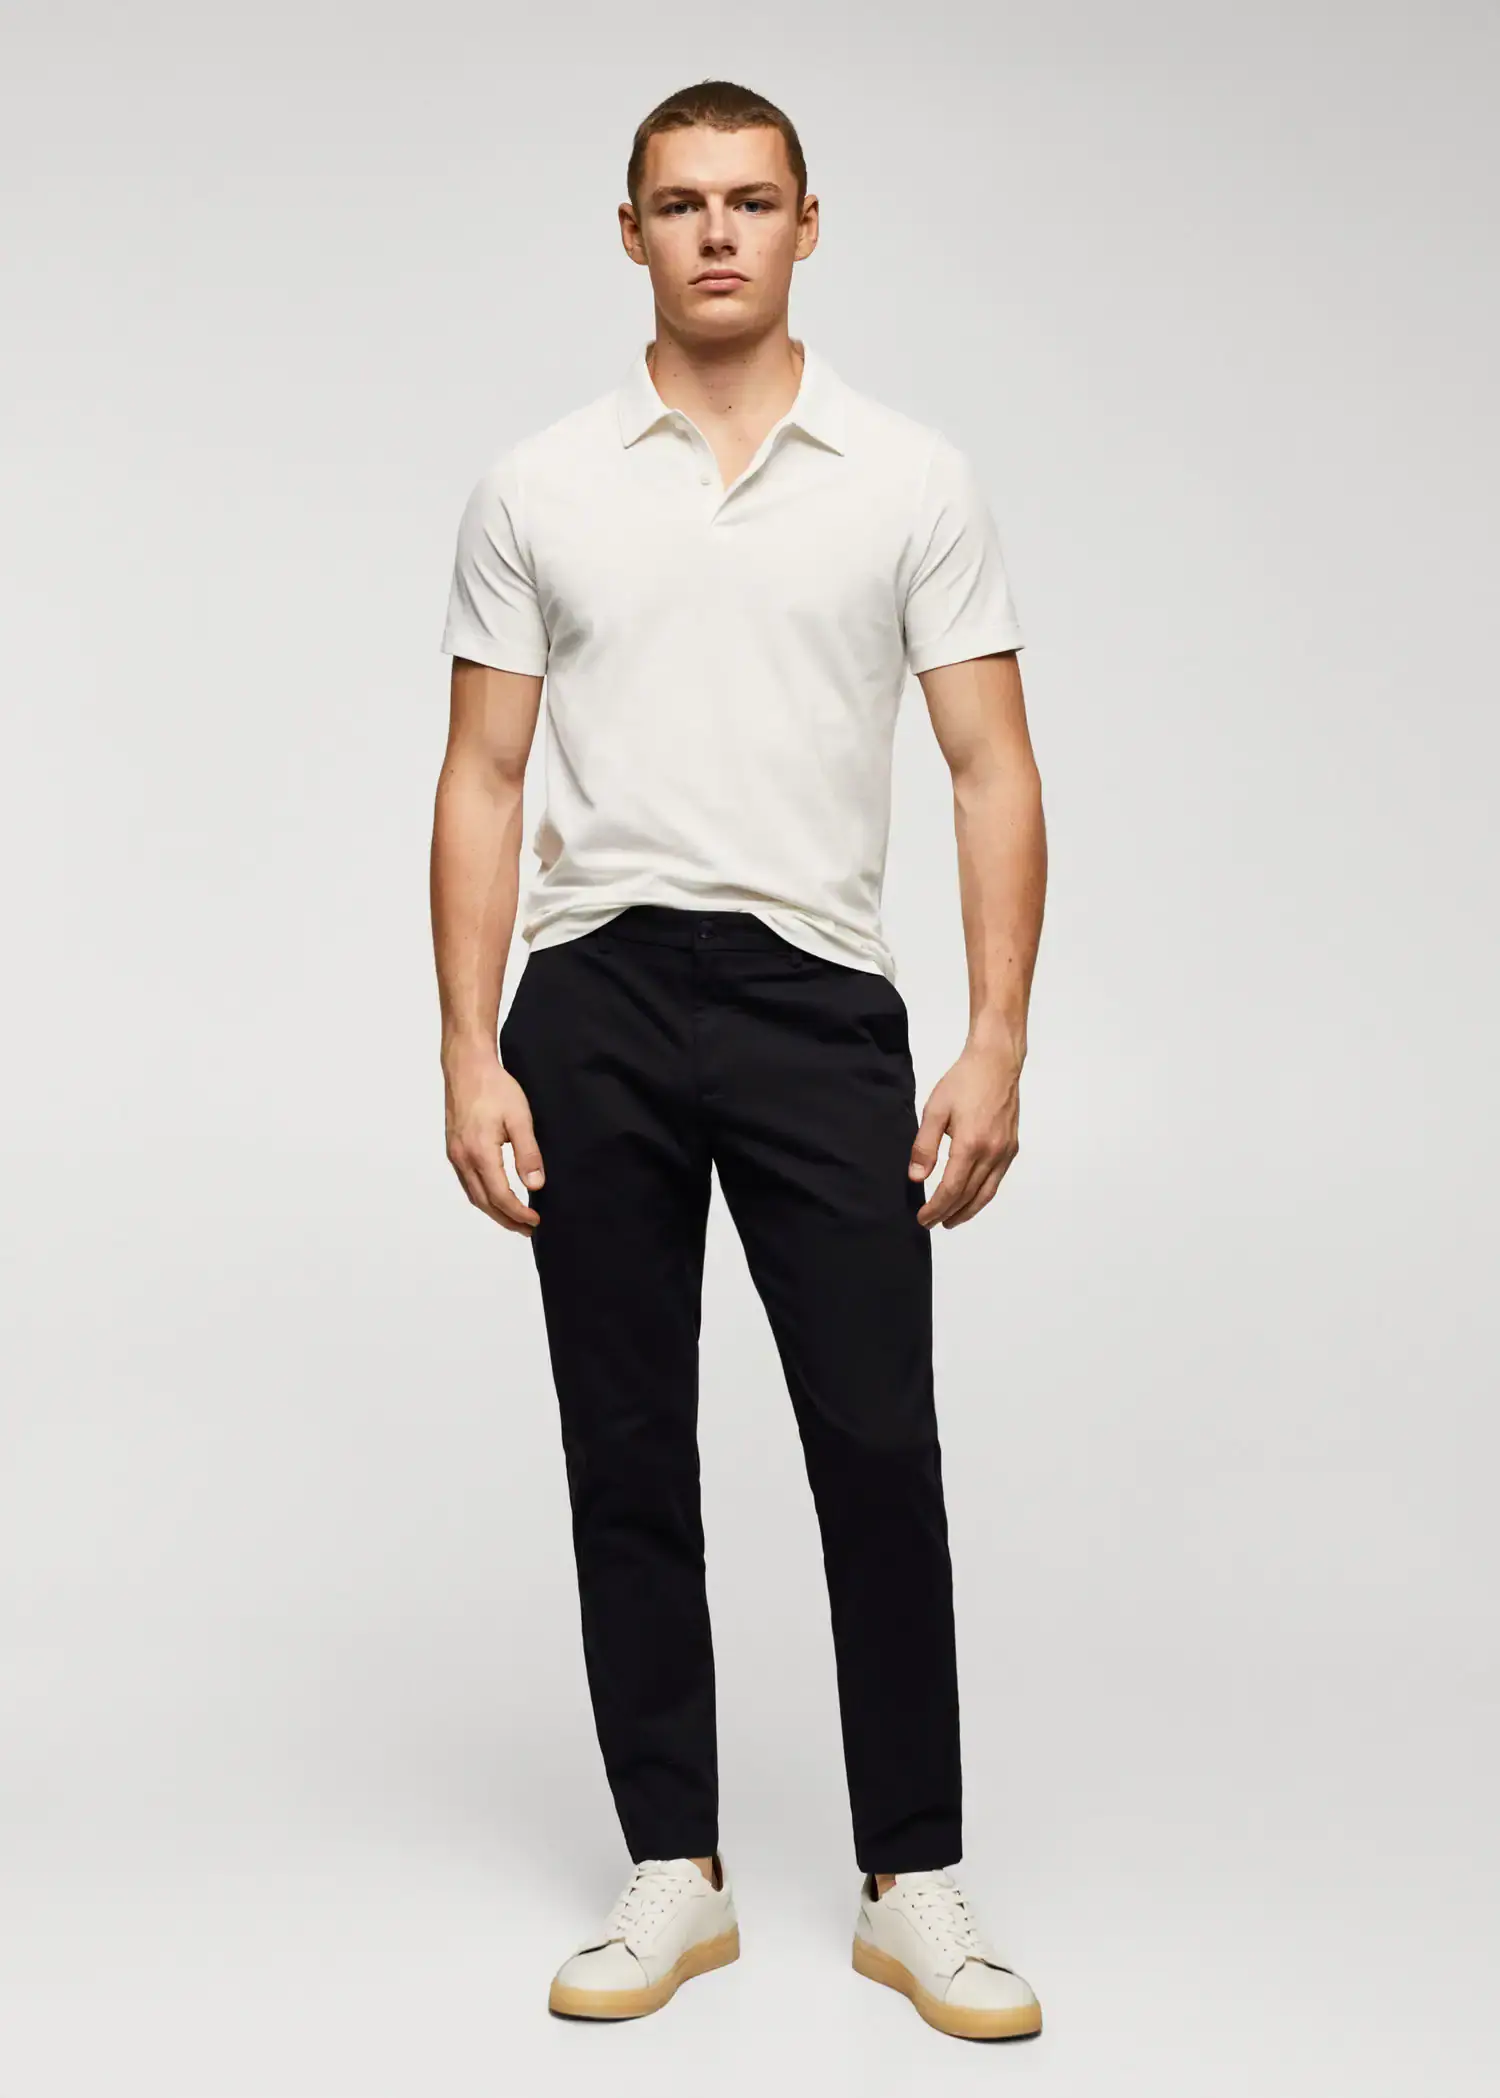 Mango Cotton tapered crop pants. a man wearing a white shirt and black pants. 